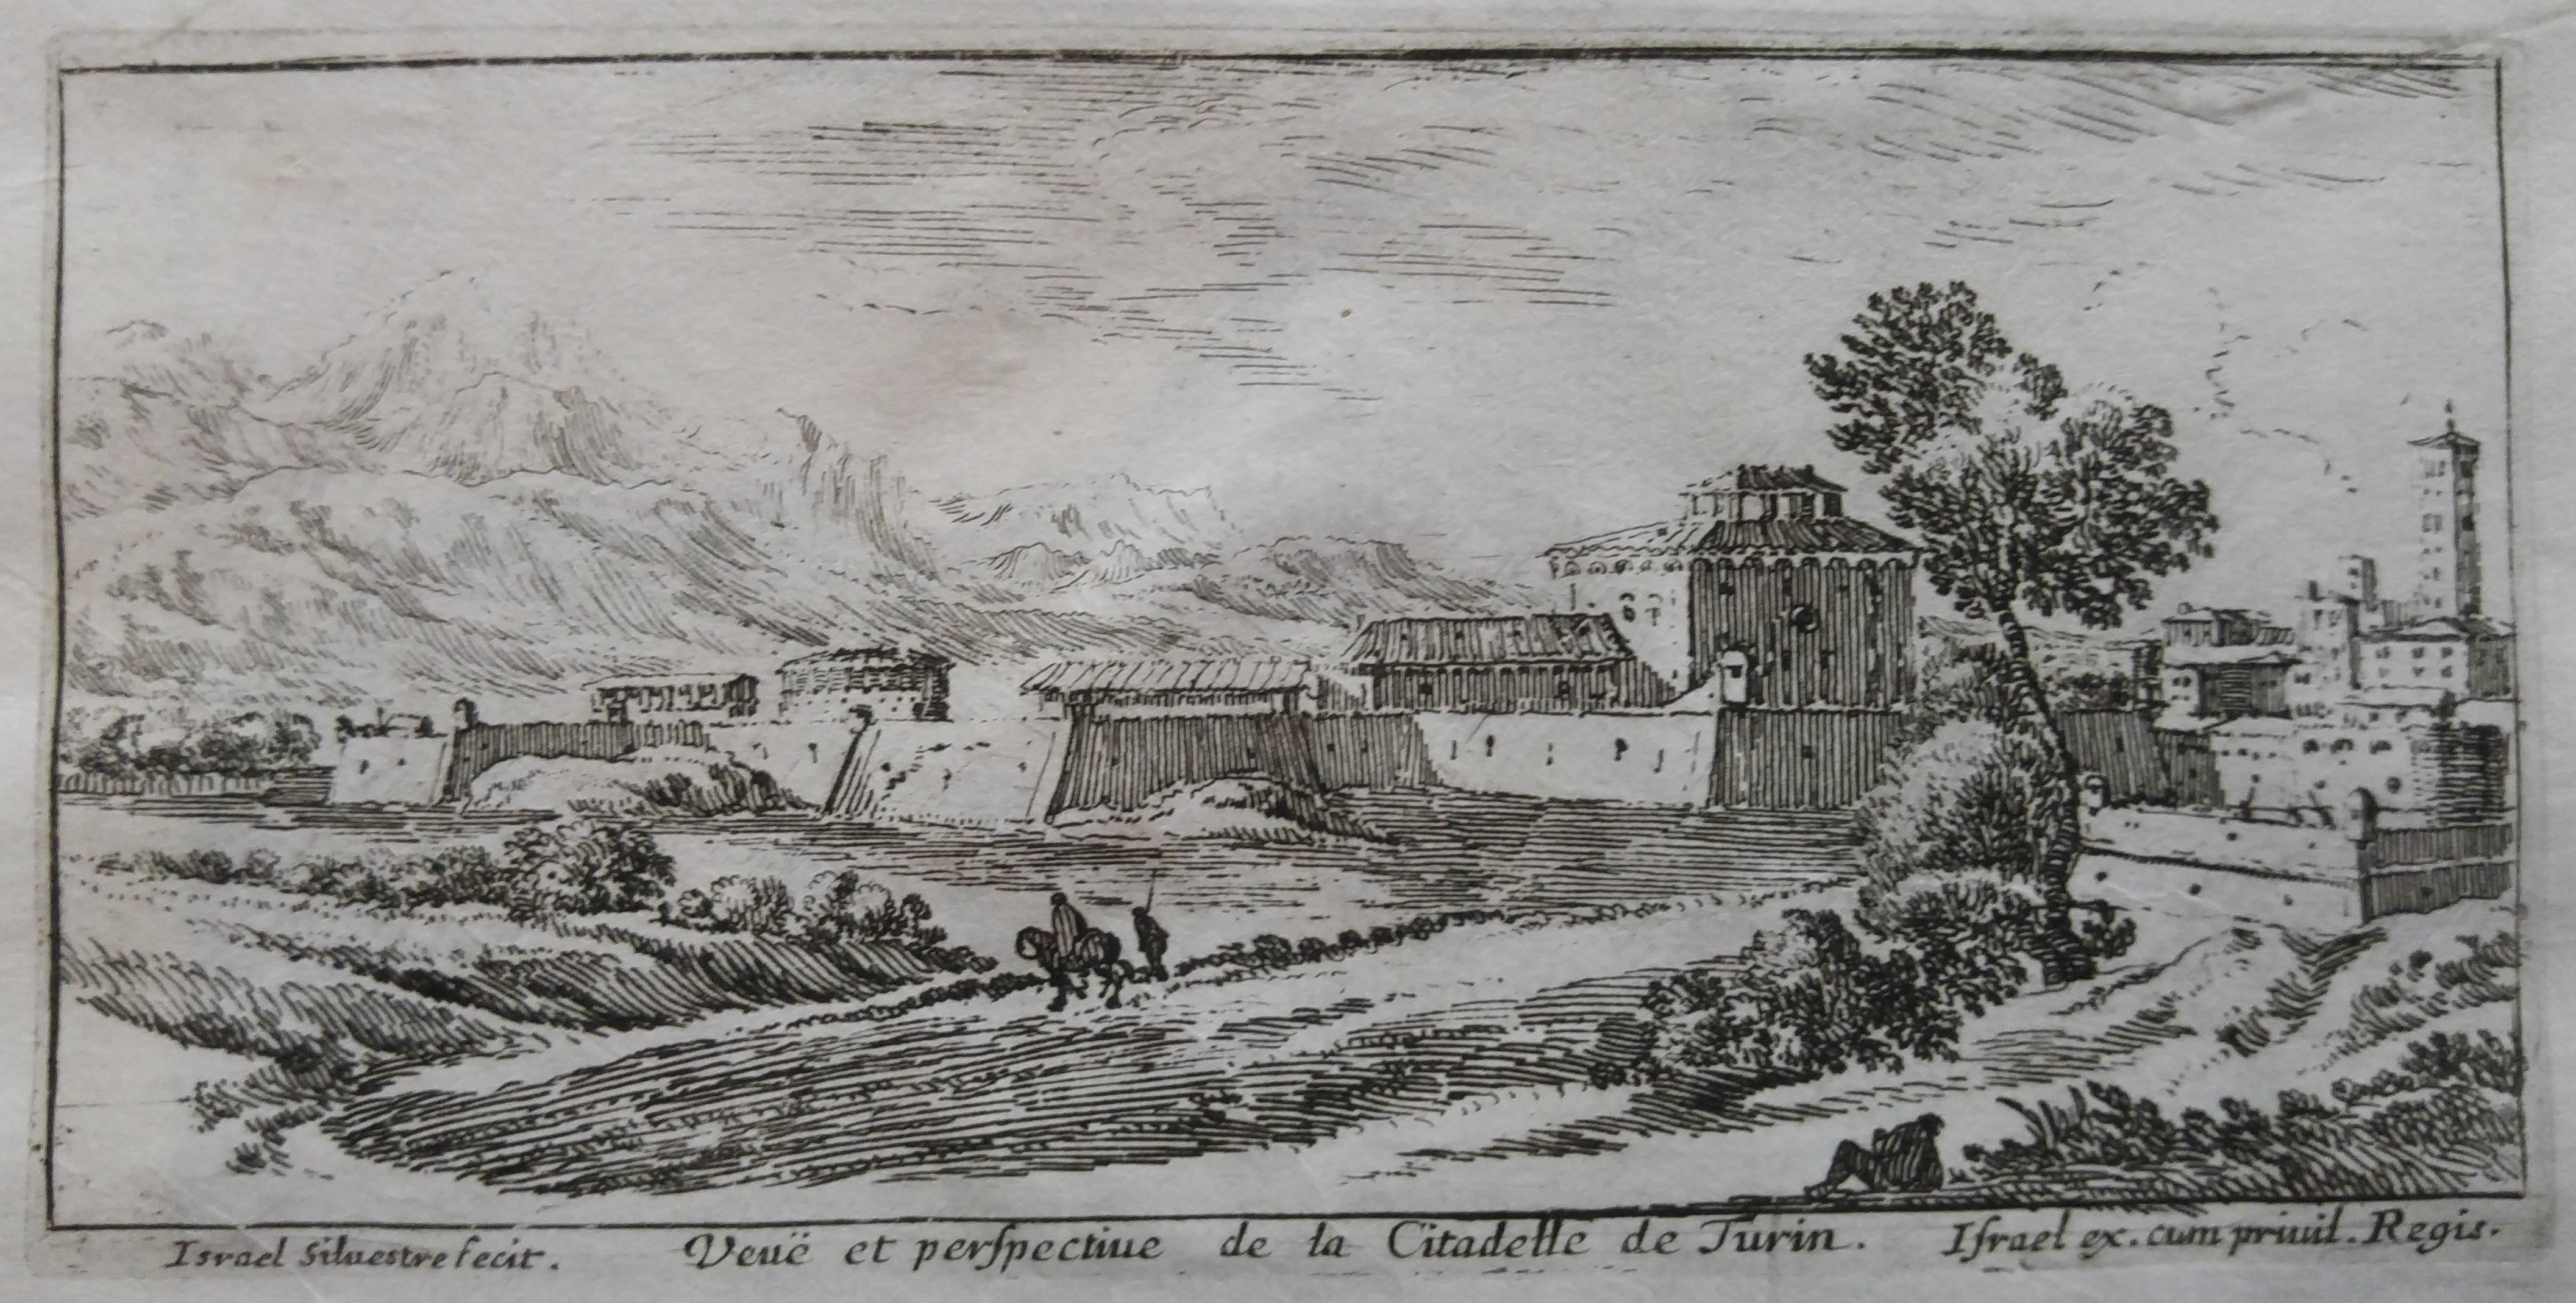 Israël Silvestre : Veuë et perspective de la Citadelle de Turin.